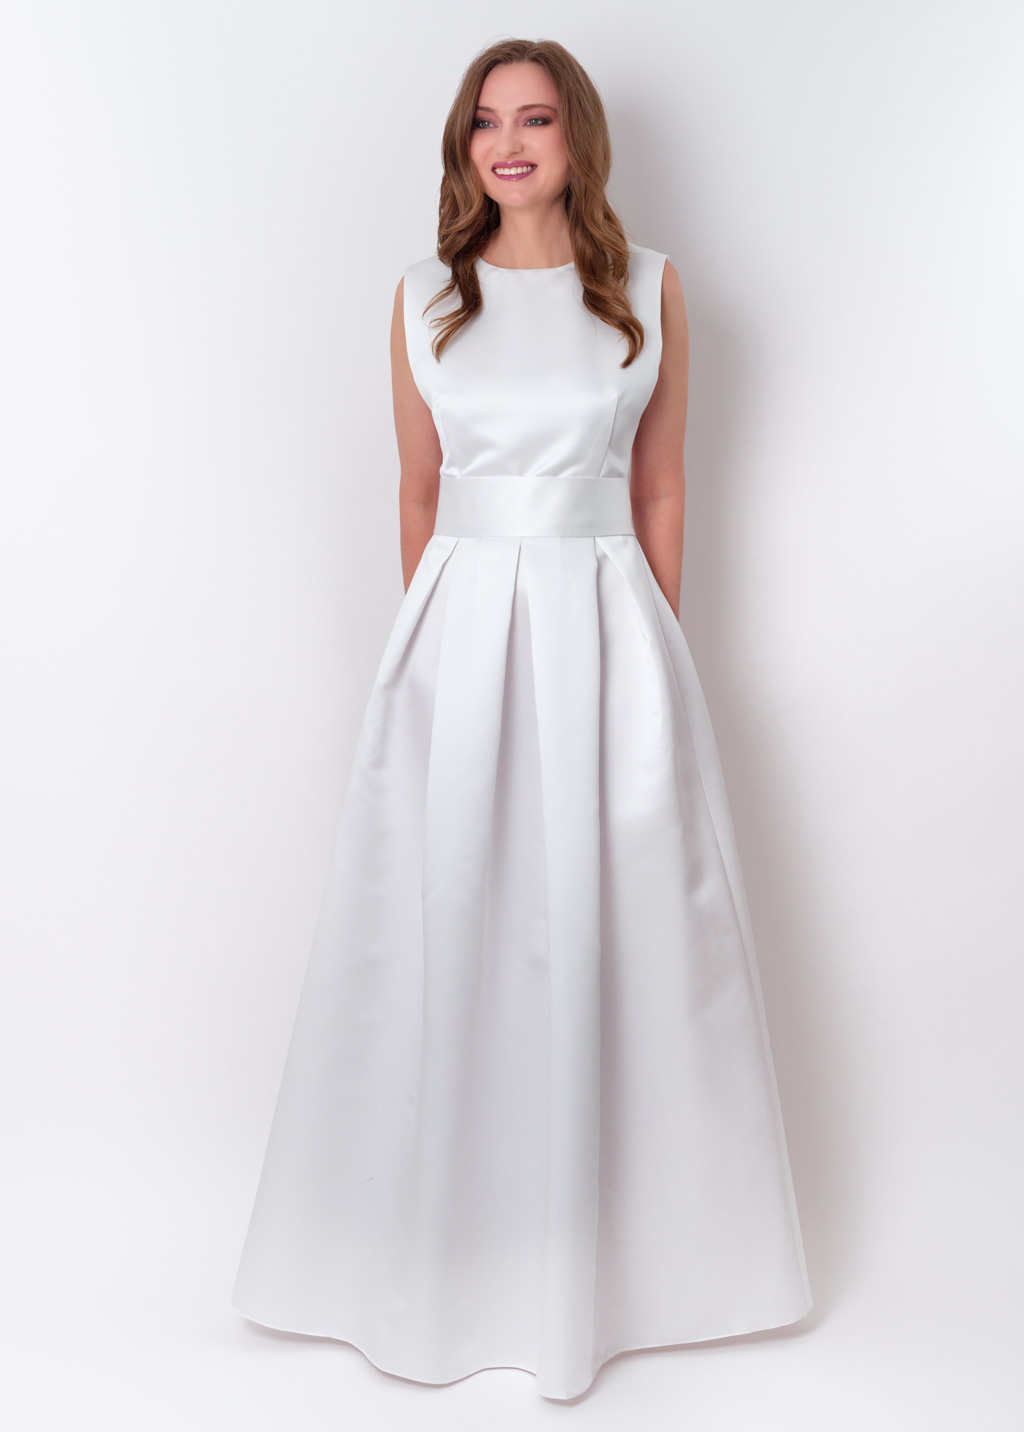 White long satin dress with belt